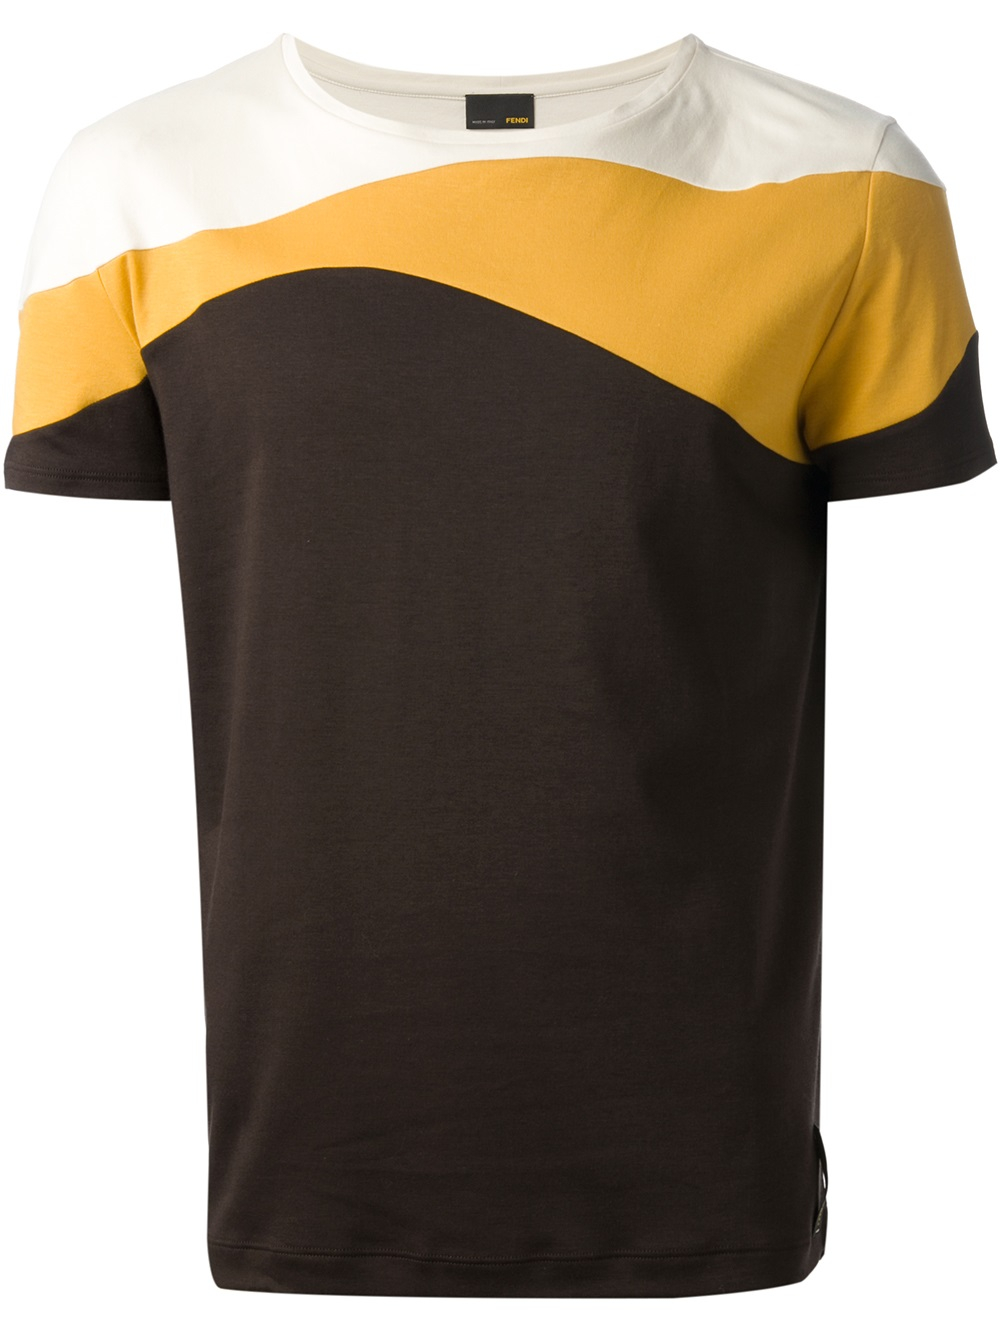 Fendi Colour Block Tshirt in Brown (Yellow) for Men - Lyst